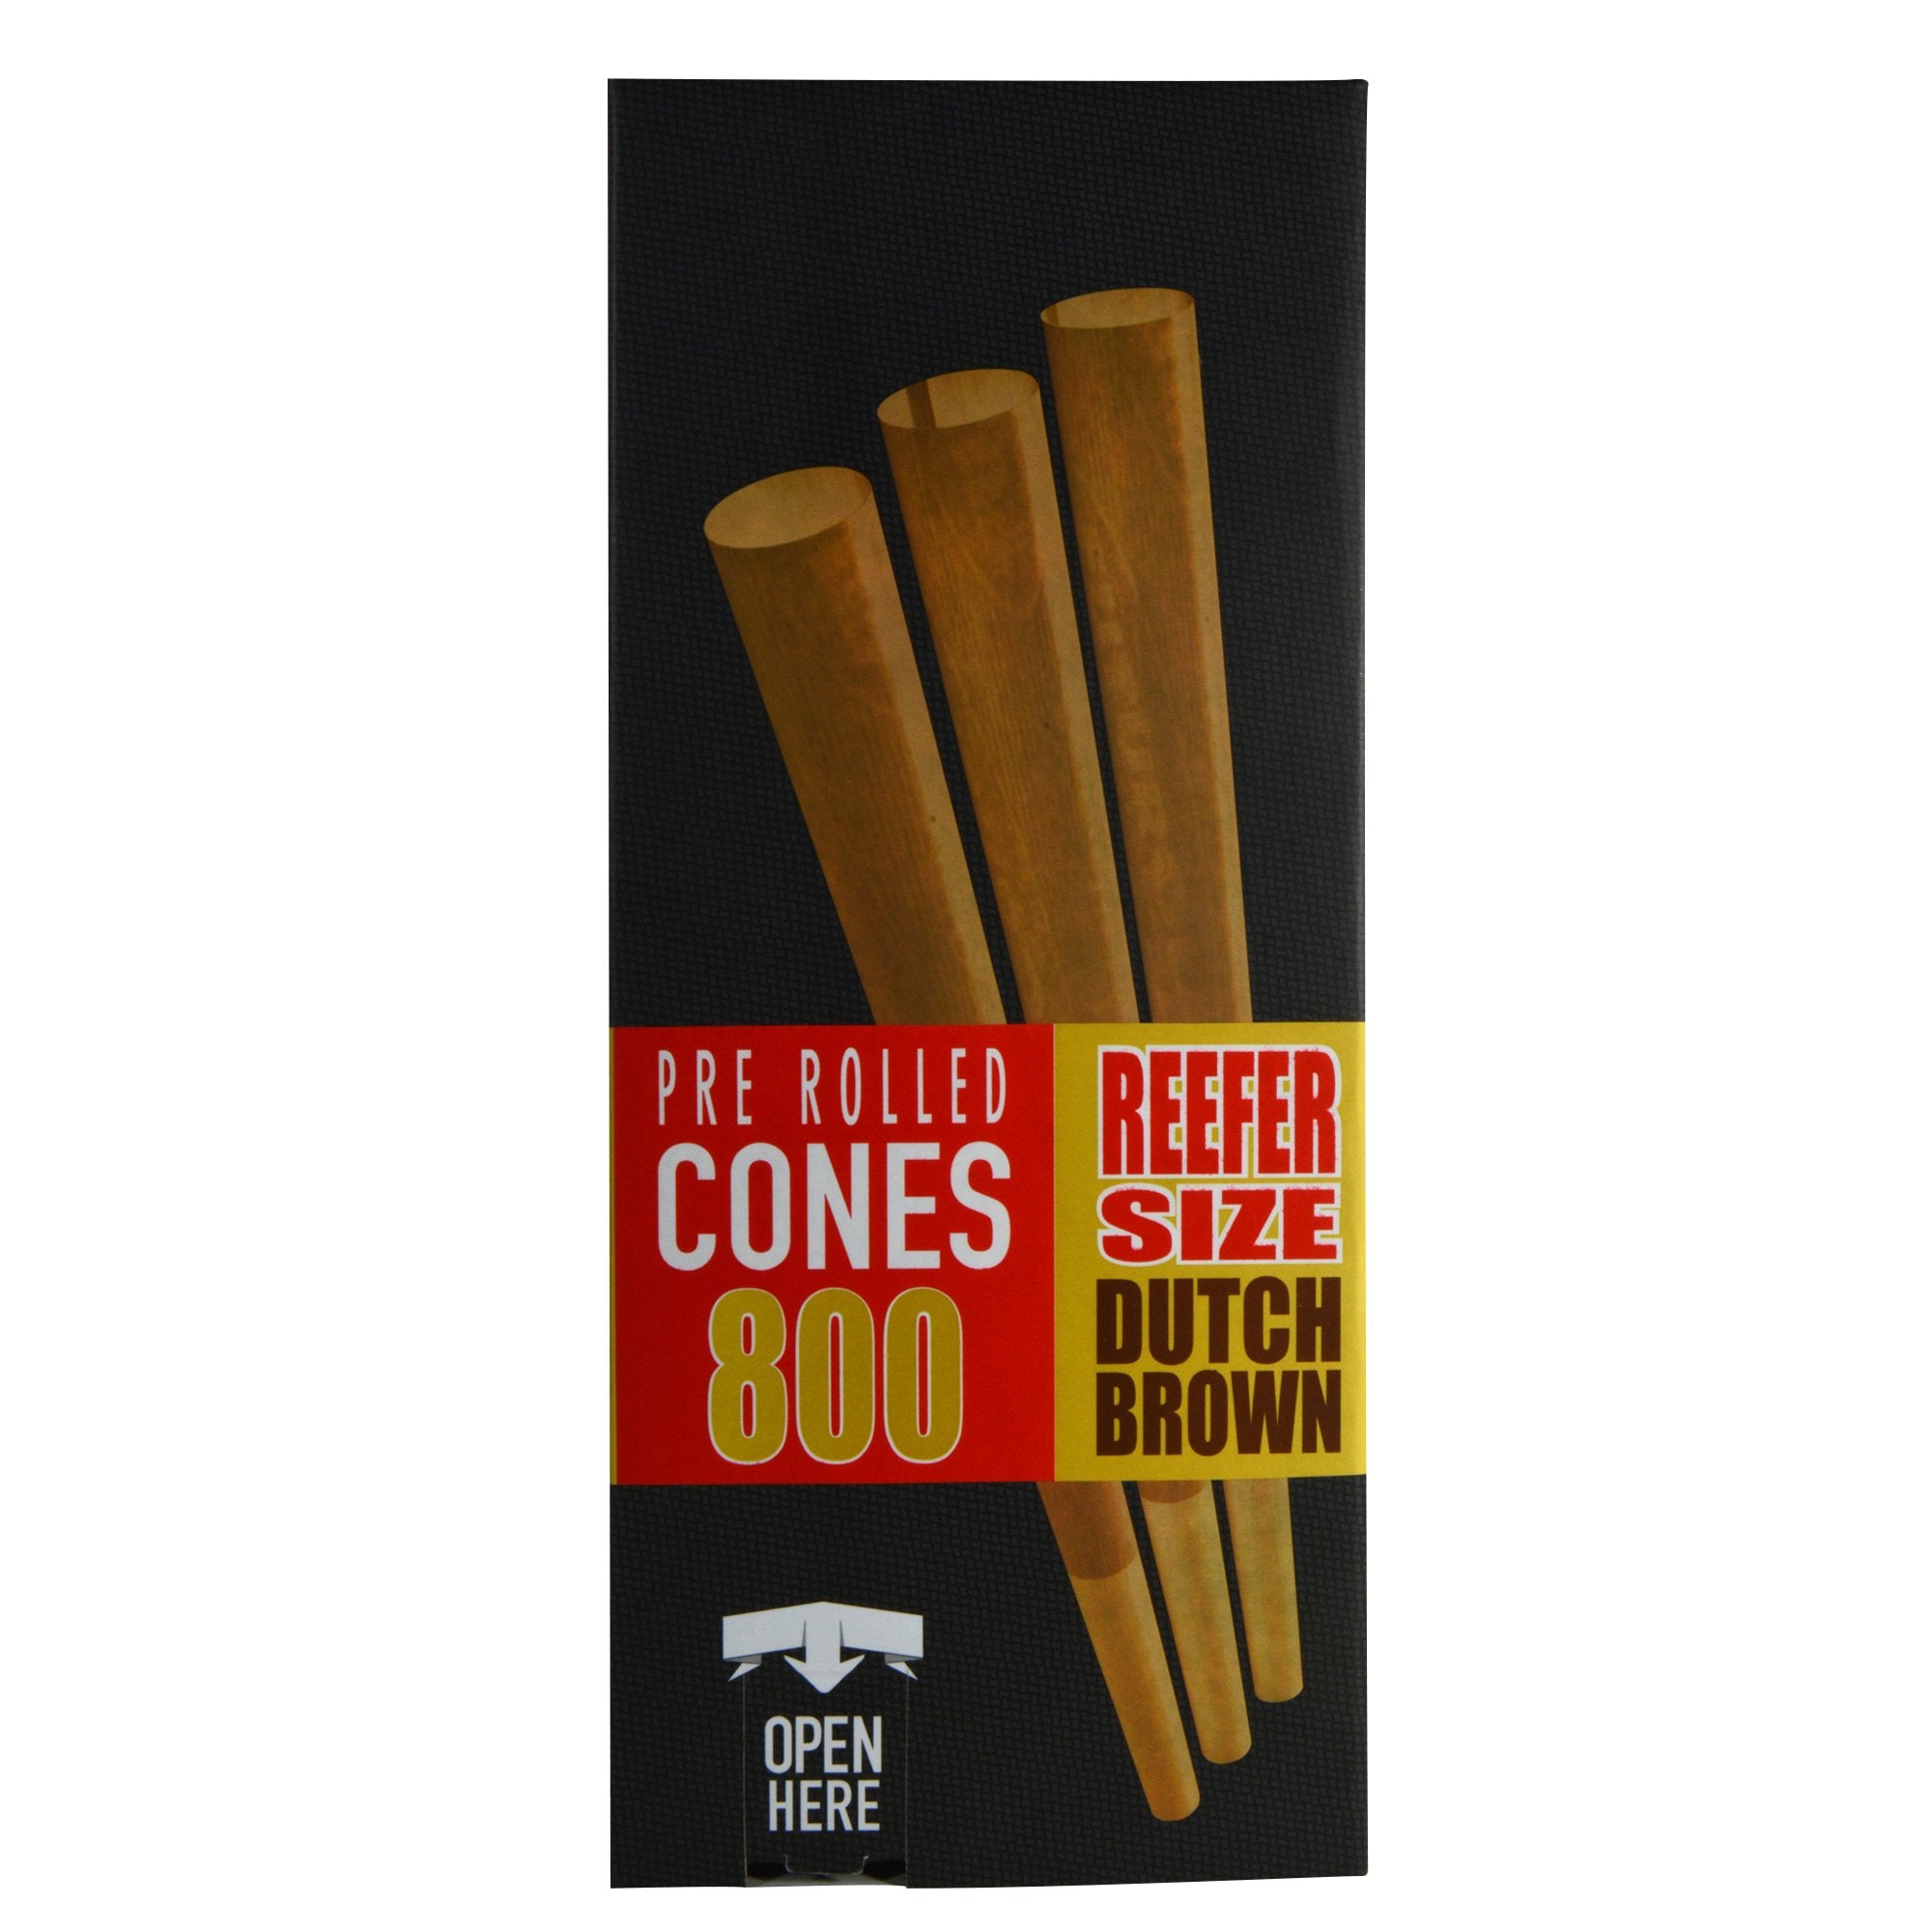 FUTUROLA | Reefer Size Pre-Rolled Cones | 98mm - Dutch Brown Paper - 800 Count - 5